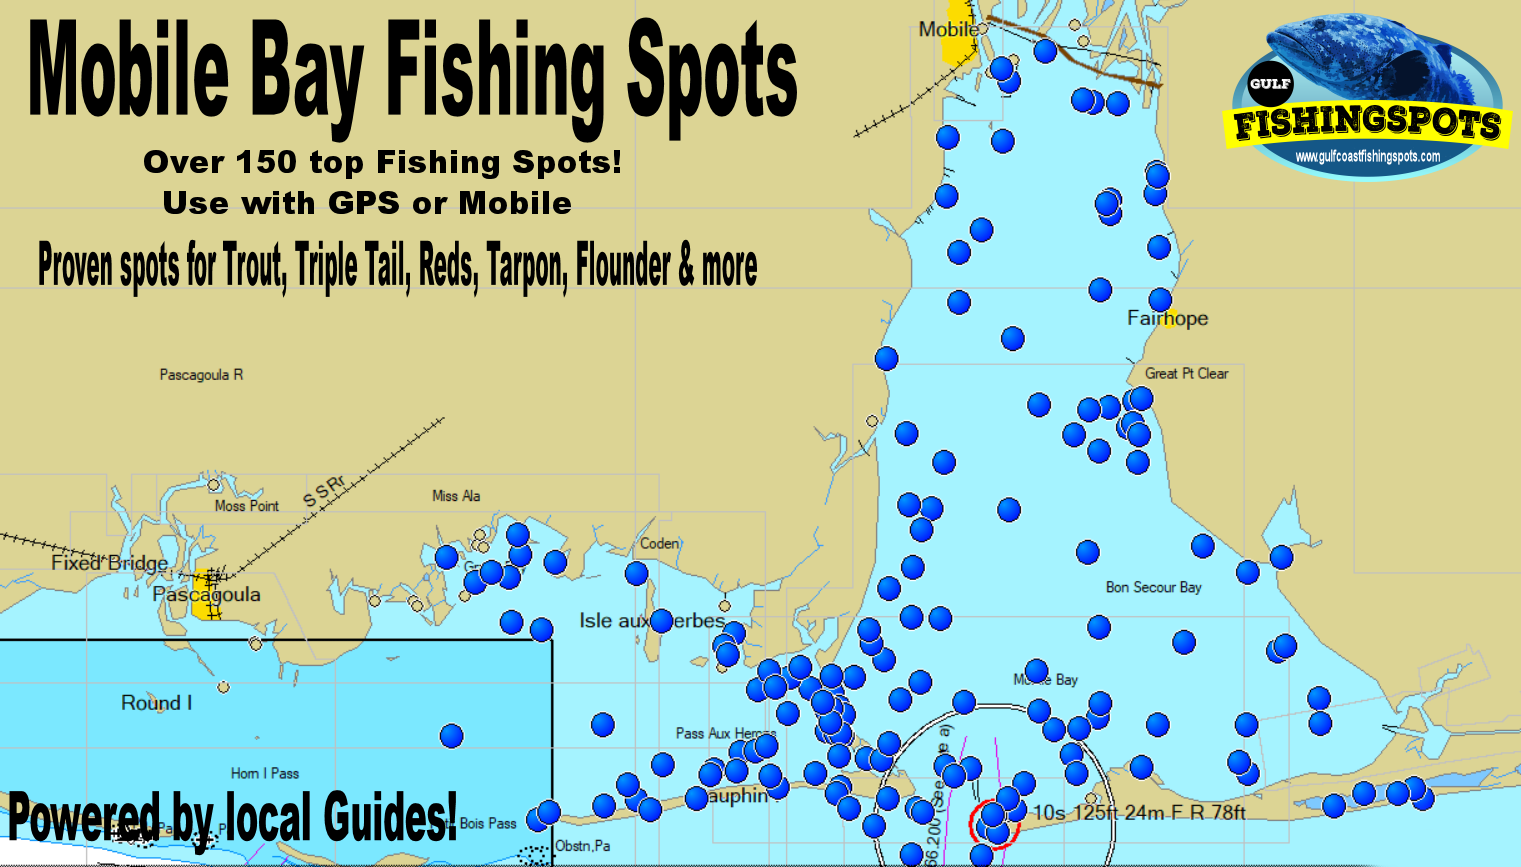 Mobile Bay Gps Fishing Spots Map 